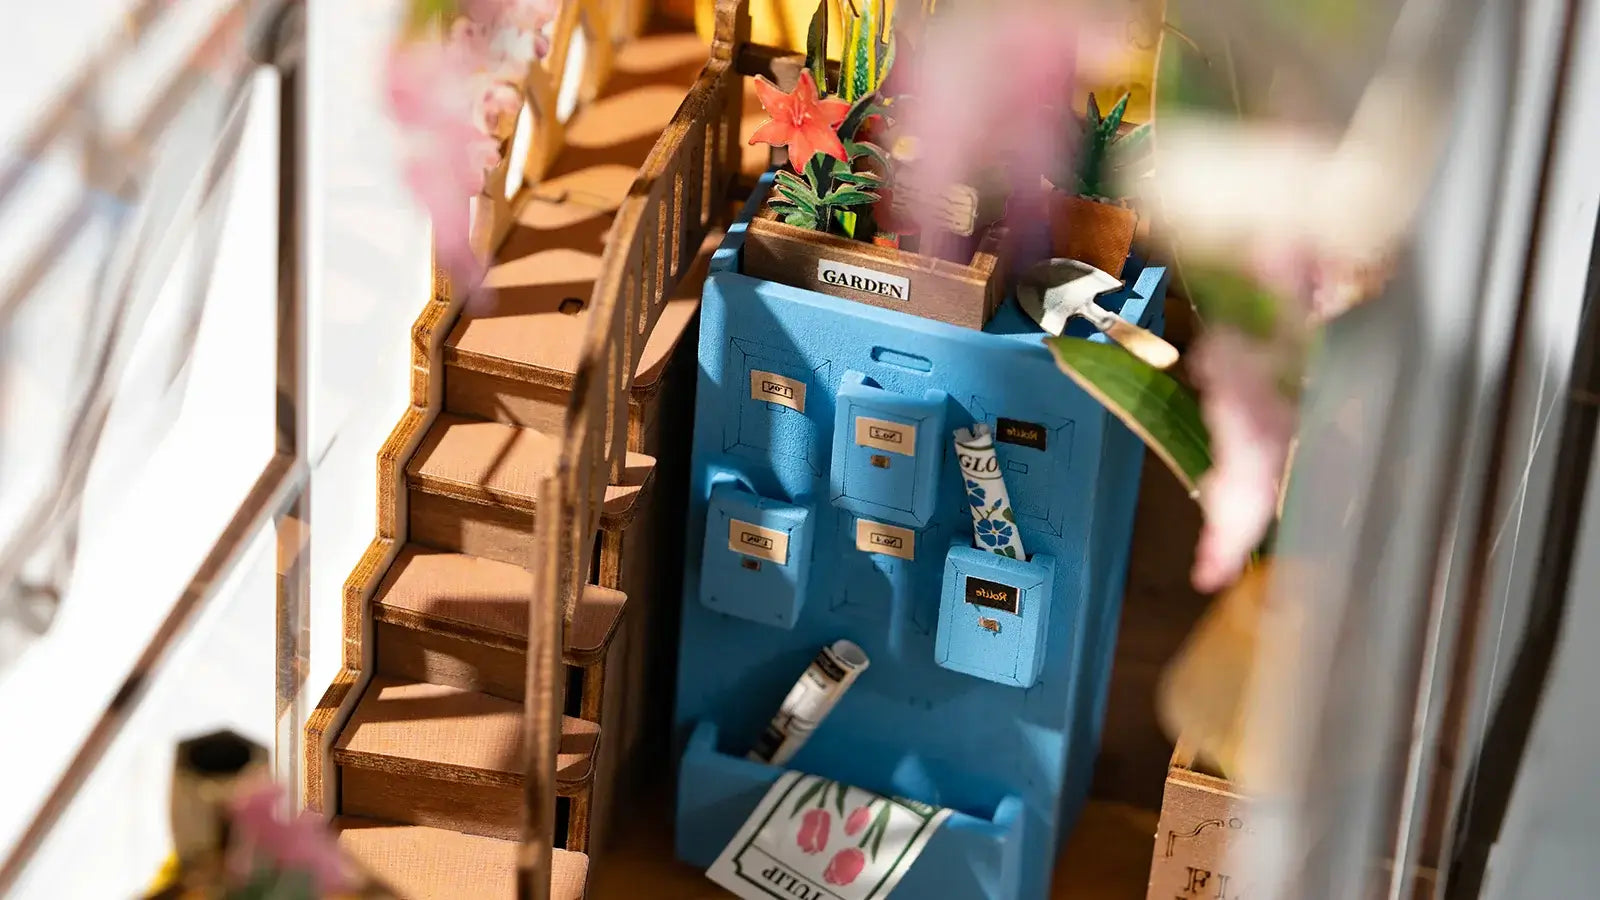 Garden House Book Nook DIY Miniature Kit – Riley Grae Store